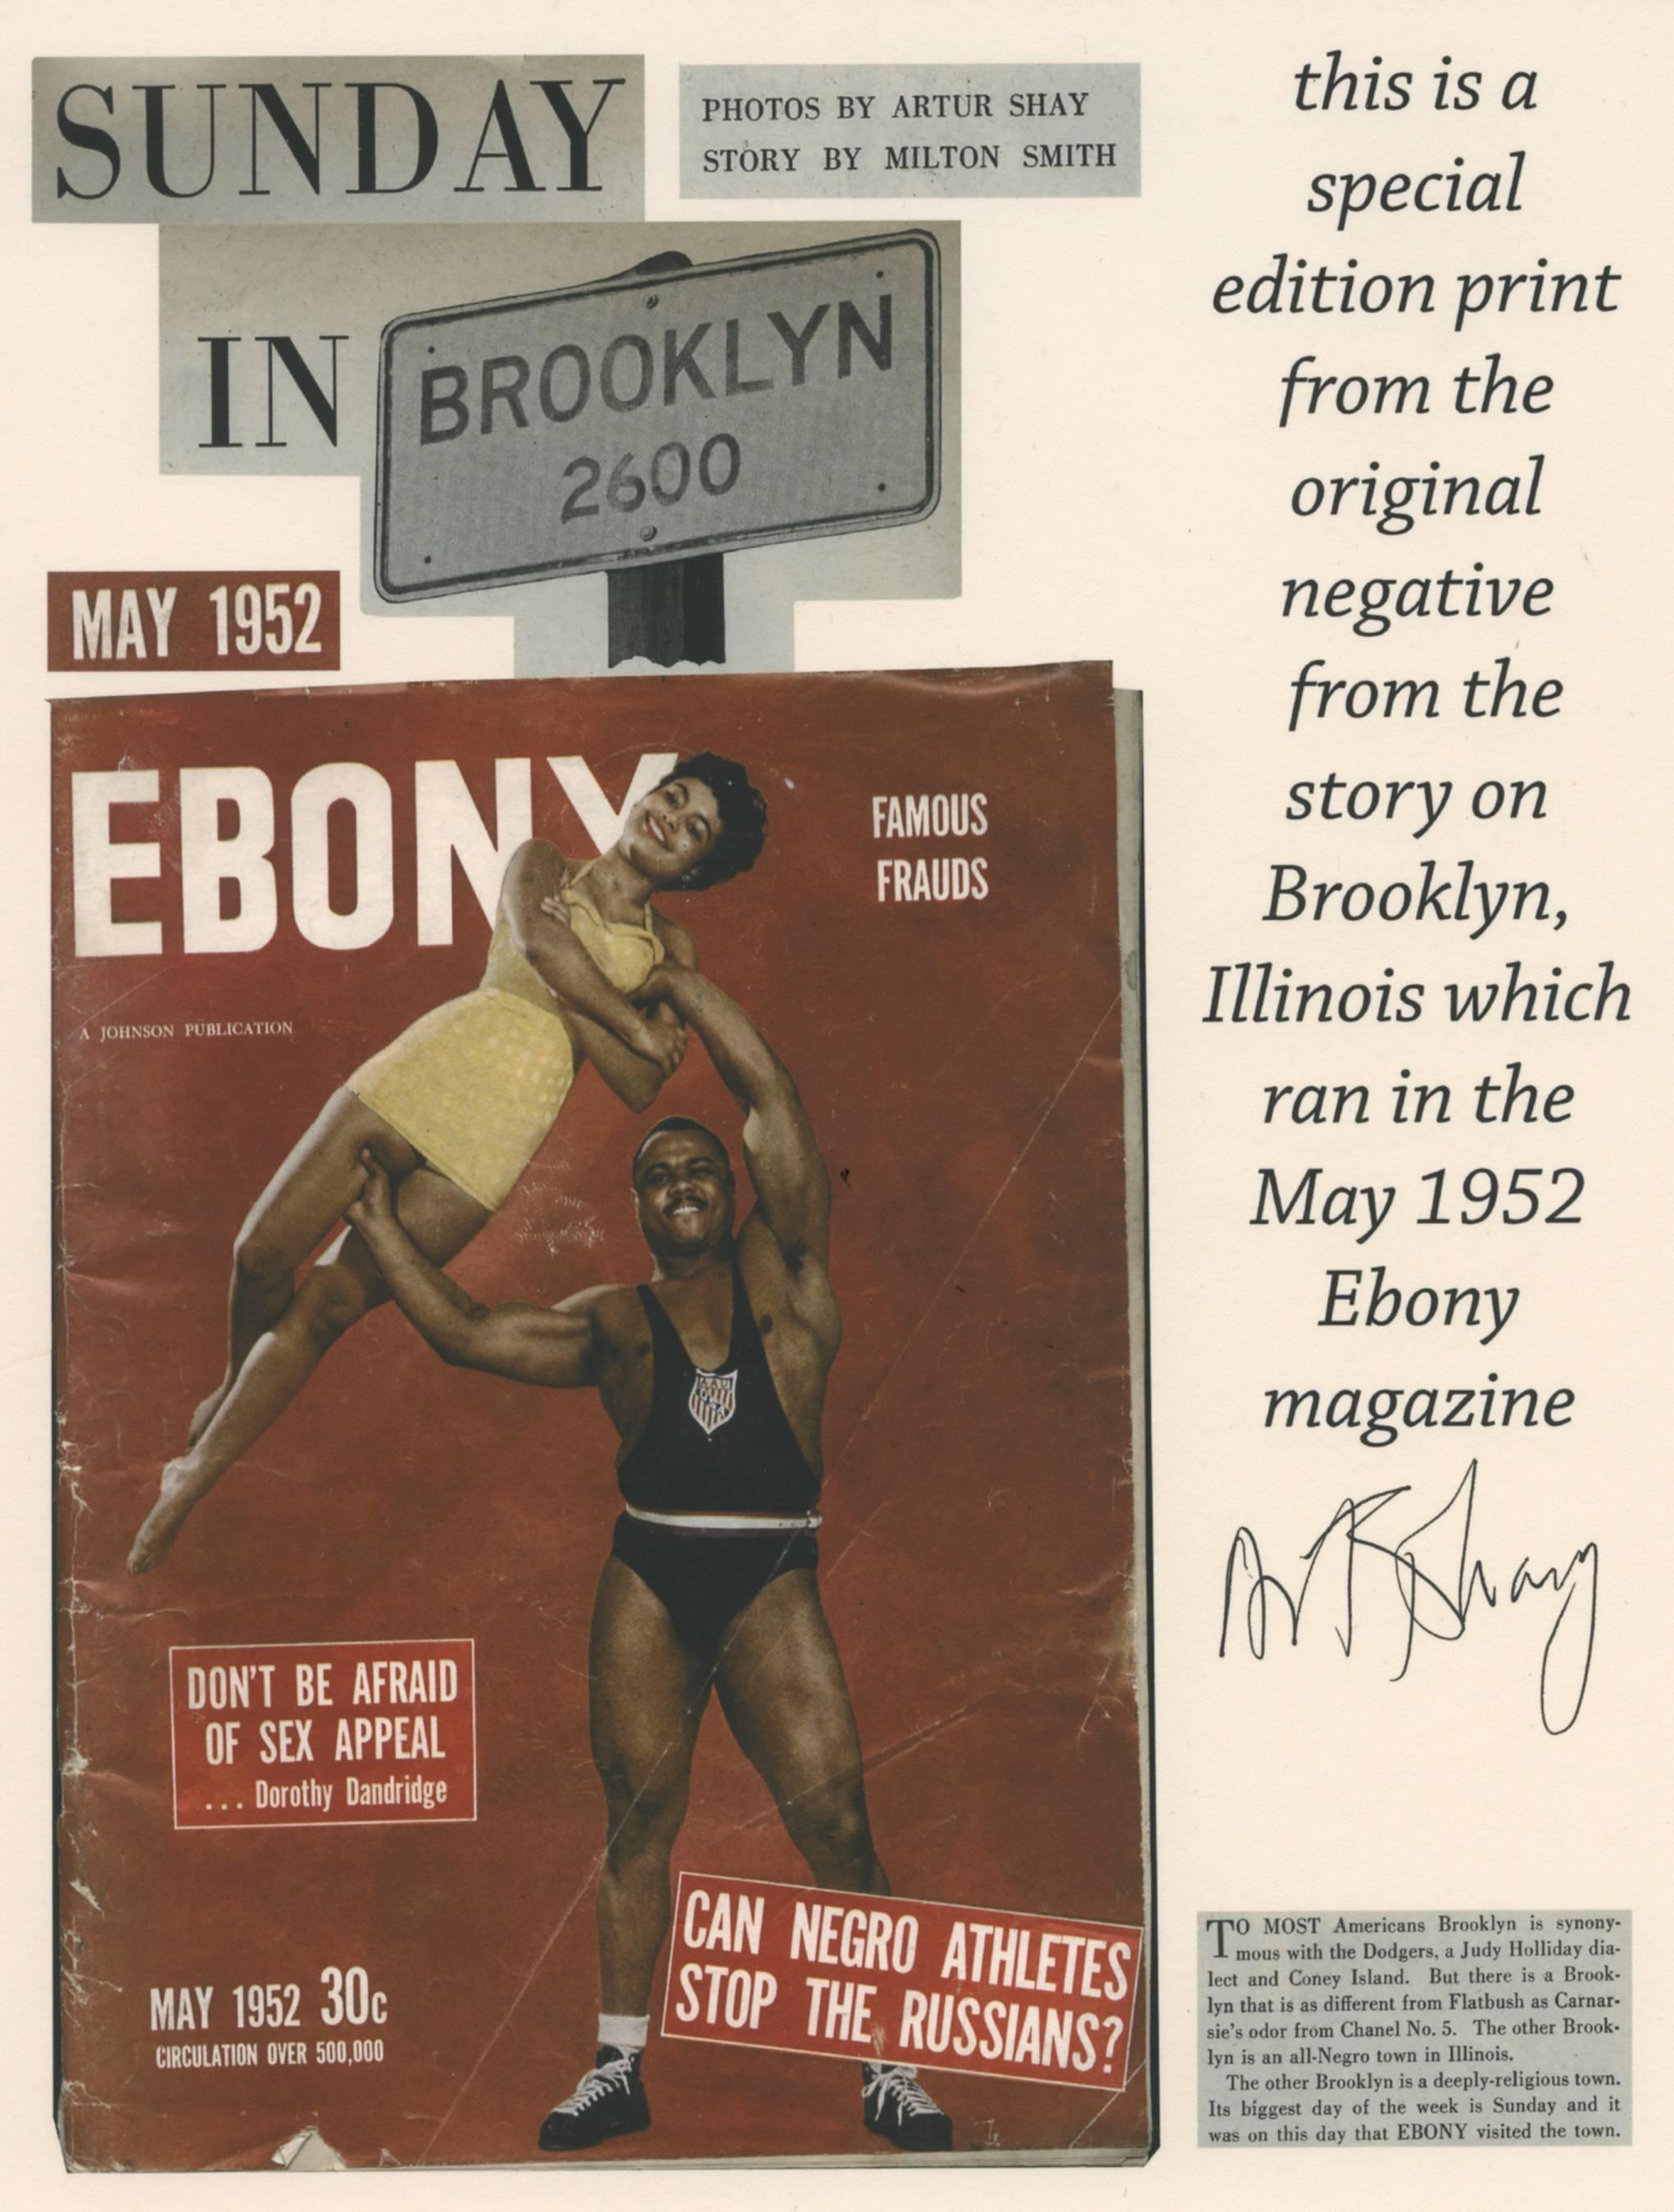 Lovejoy AKA Brooklyn, Illinois, Boys PlayingBasketball for Ebony Magazine, 1952 - Photograph by Art Shay